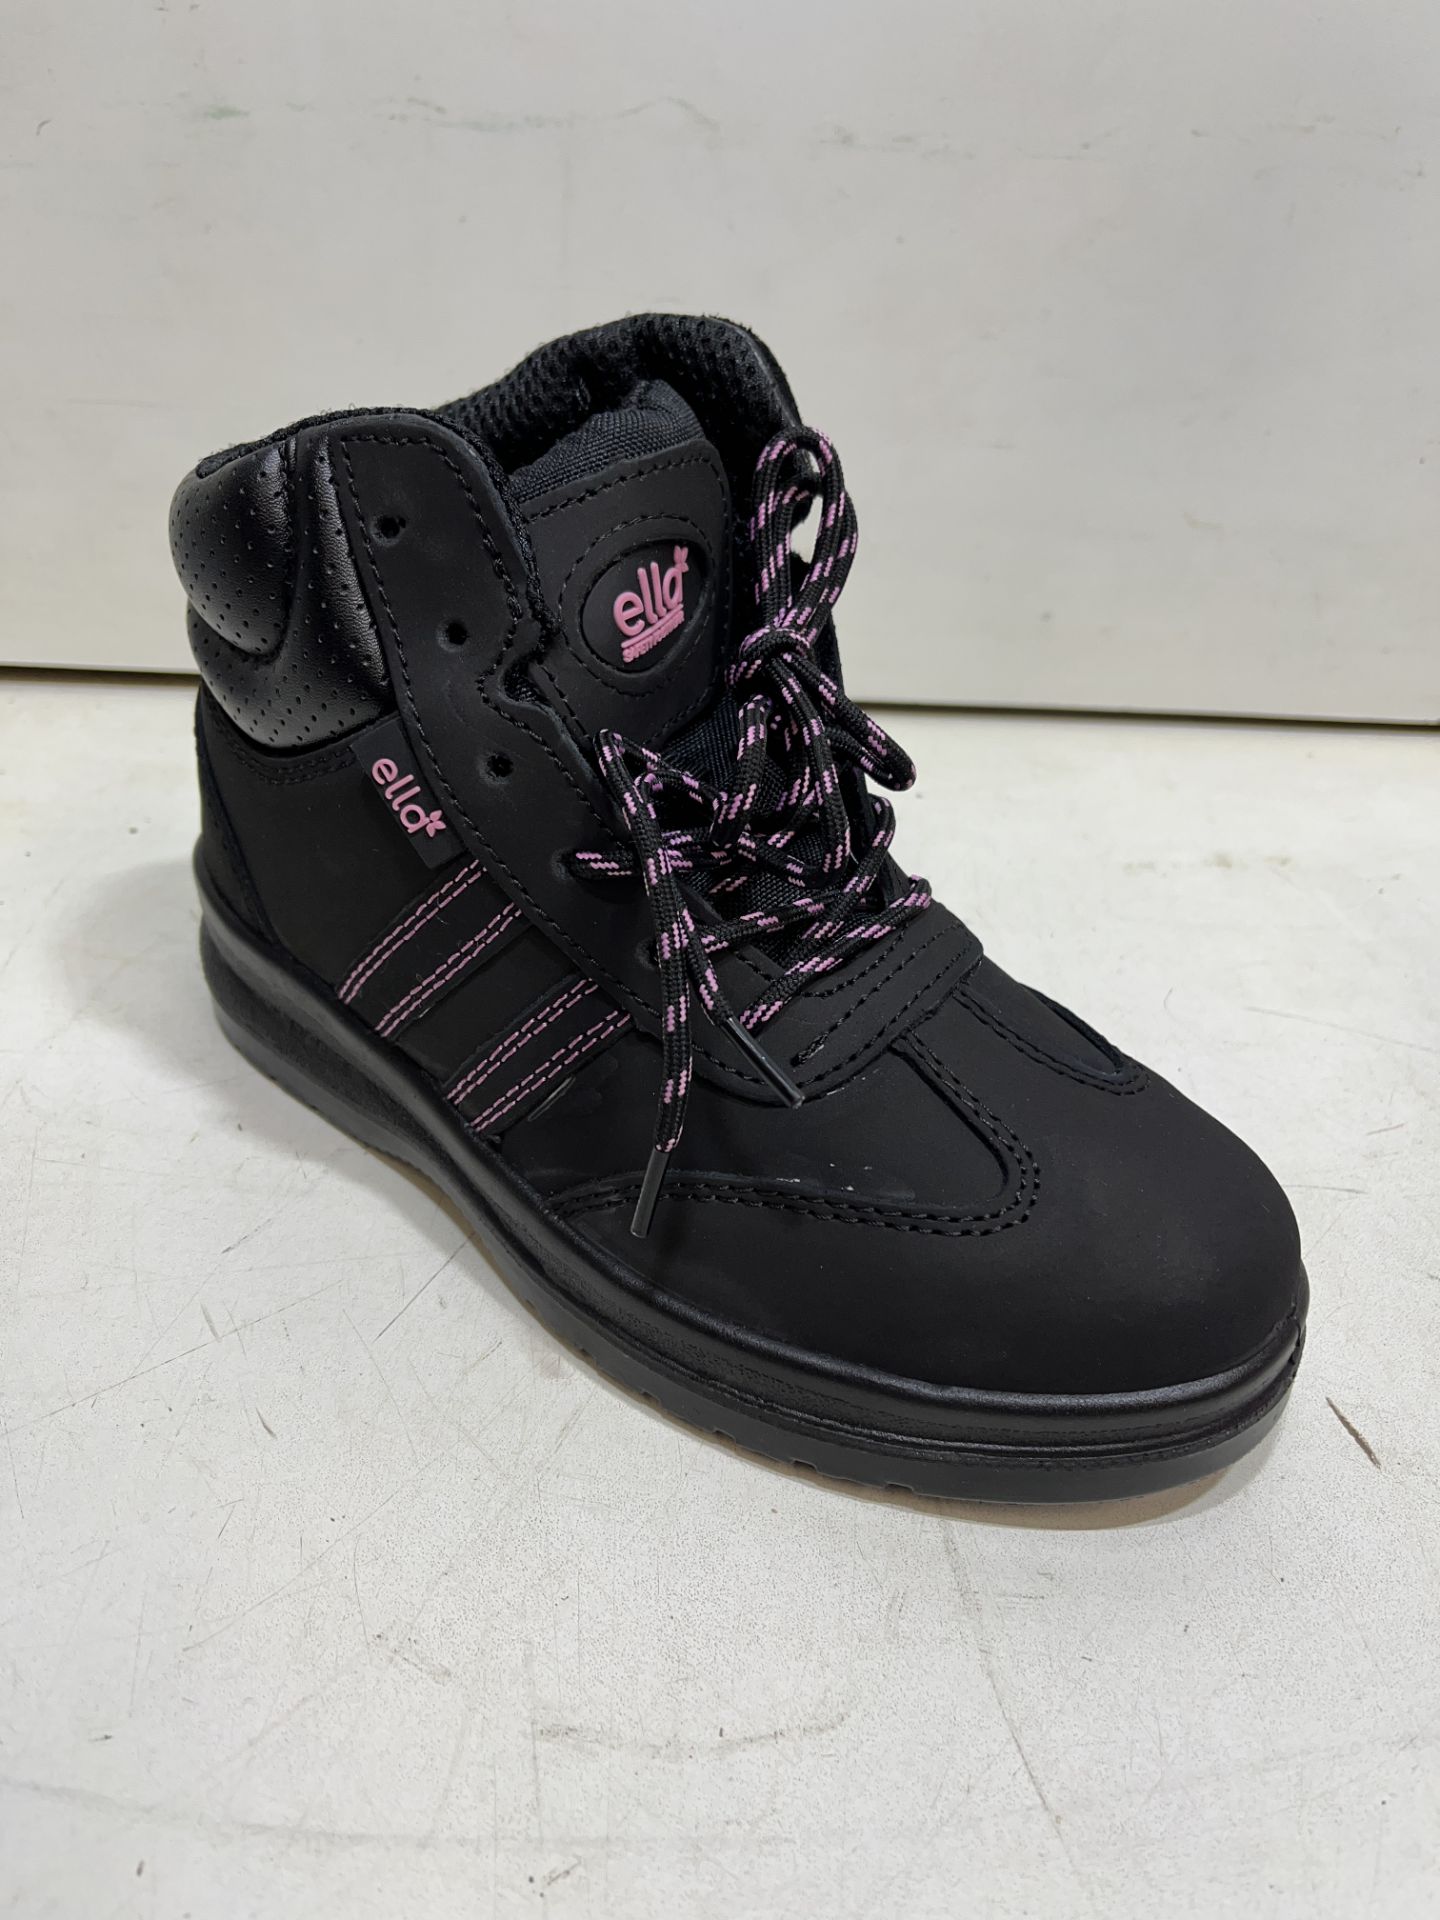 Ella Safety Boots | UK 4